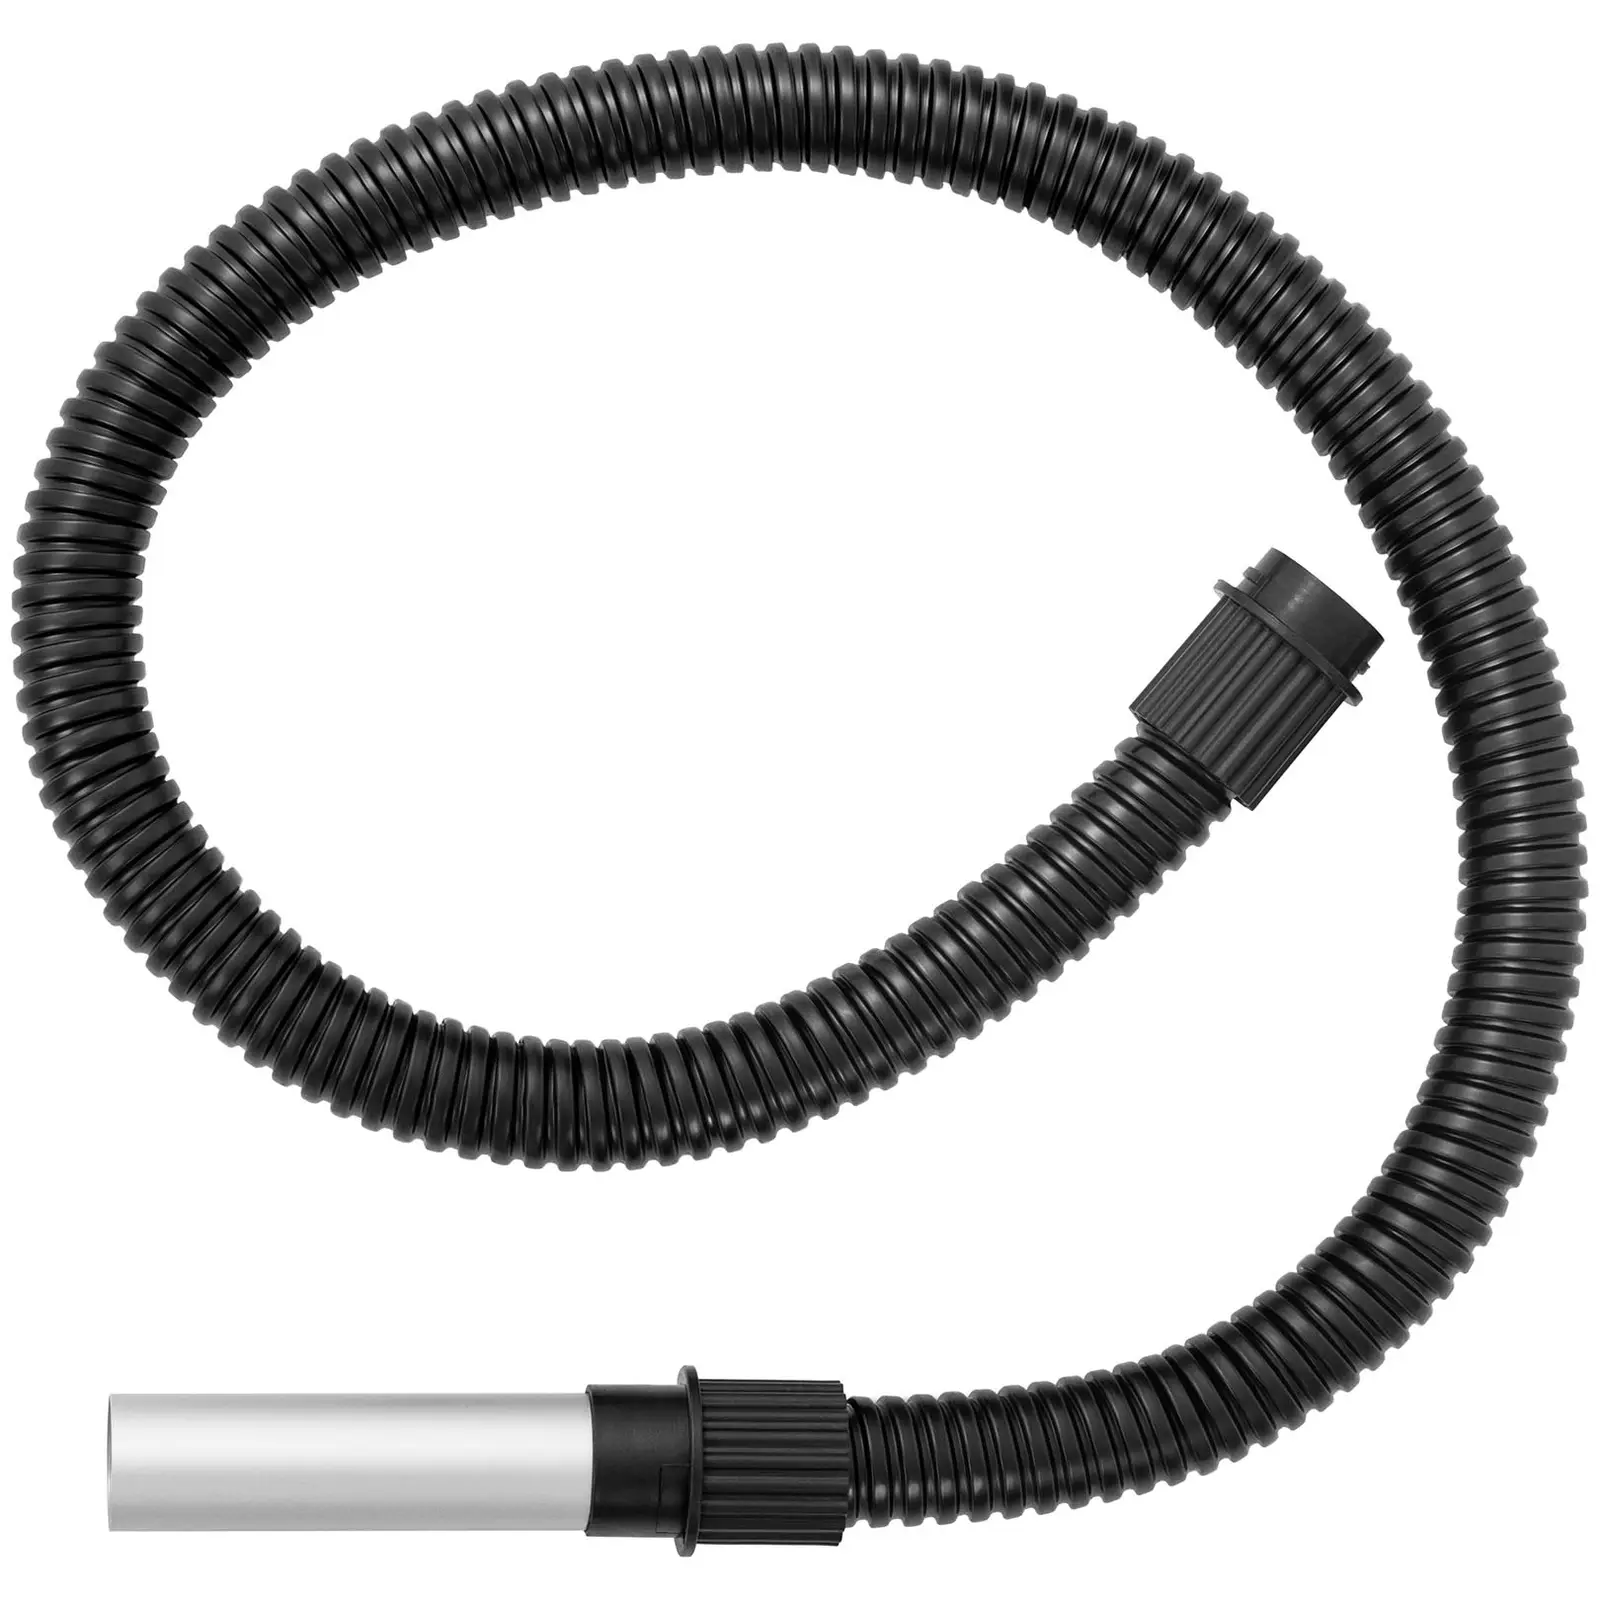 Aspirador de cenizas - 1200 W - SPCC - filtro HEPA - ruedas